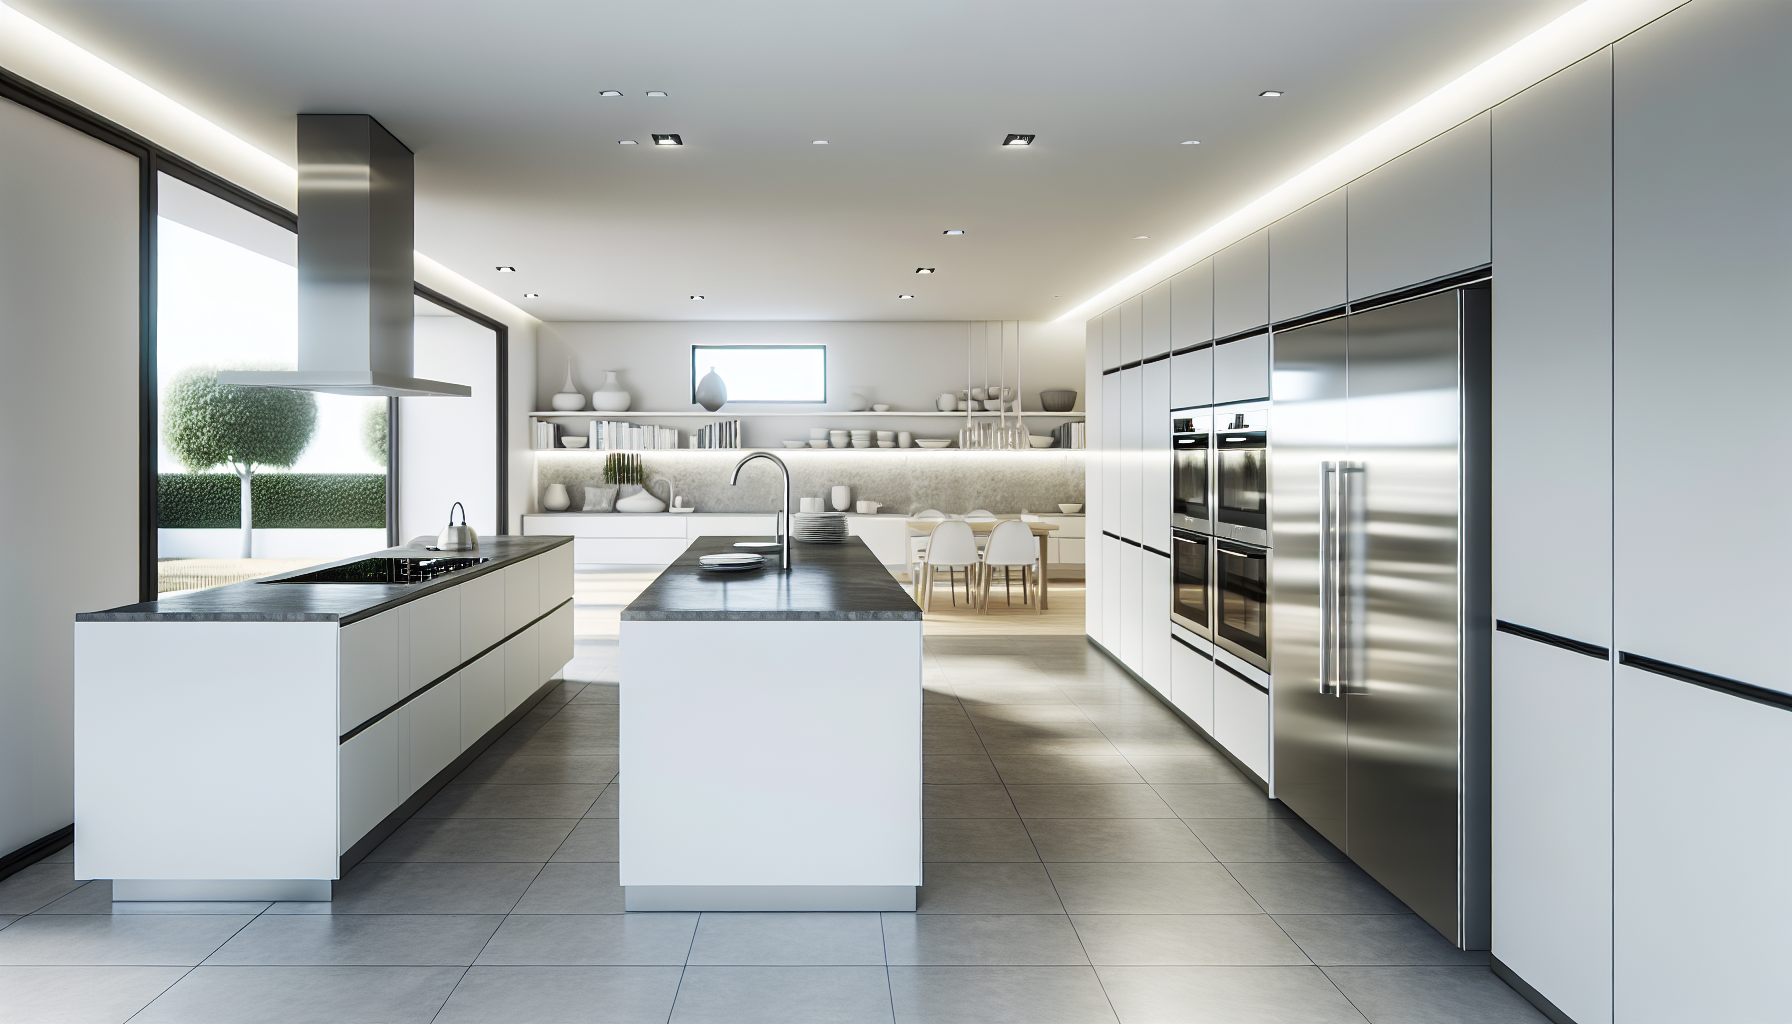 Modern kitchen with clean lines and minimalist design